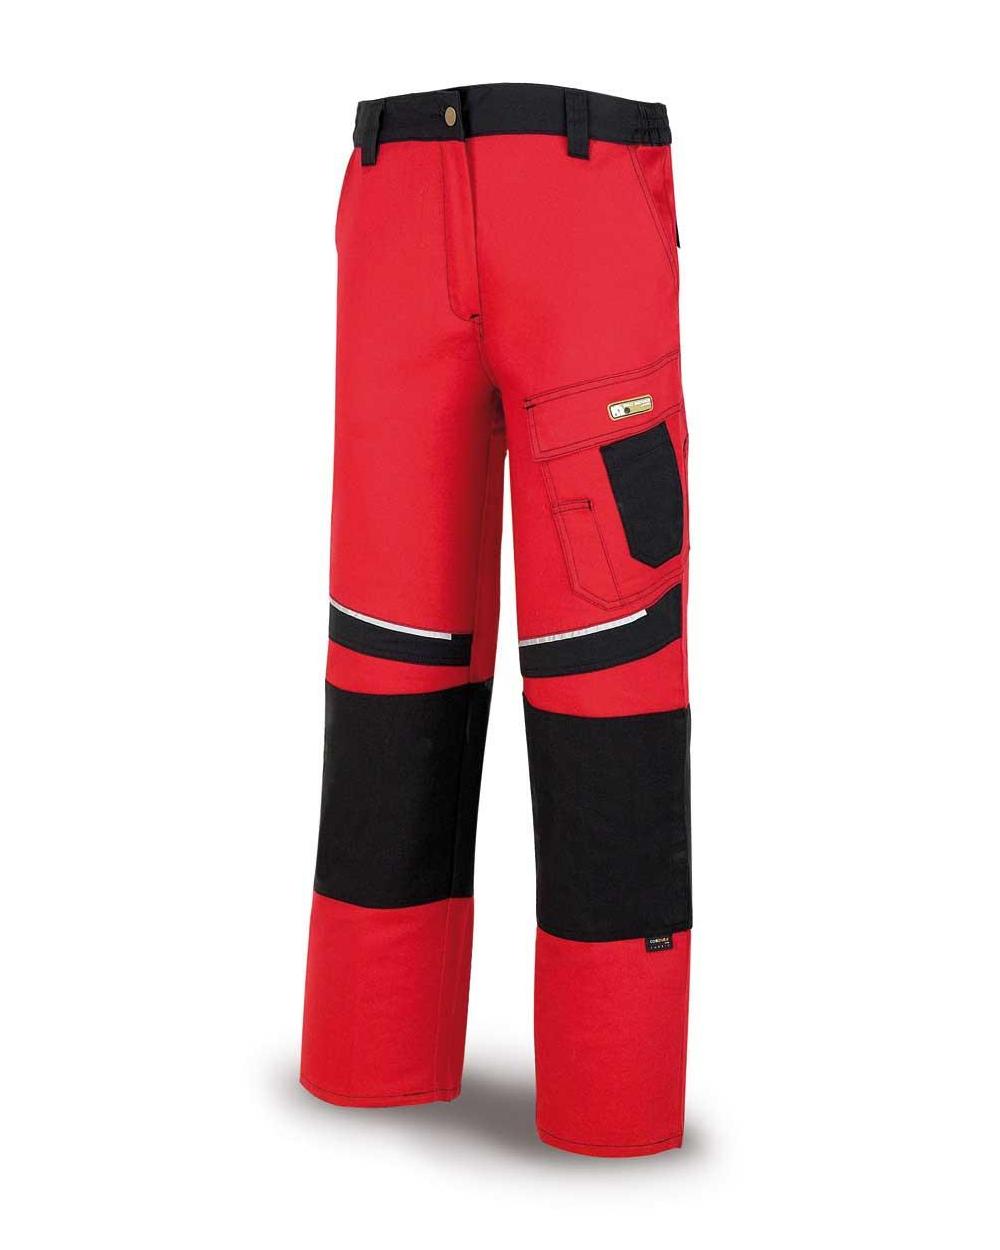 Comprar Pantalón Rojo/Negro Pro 588-Prn